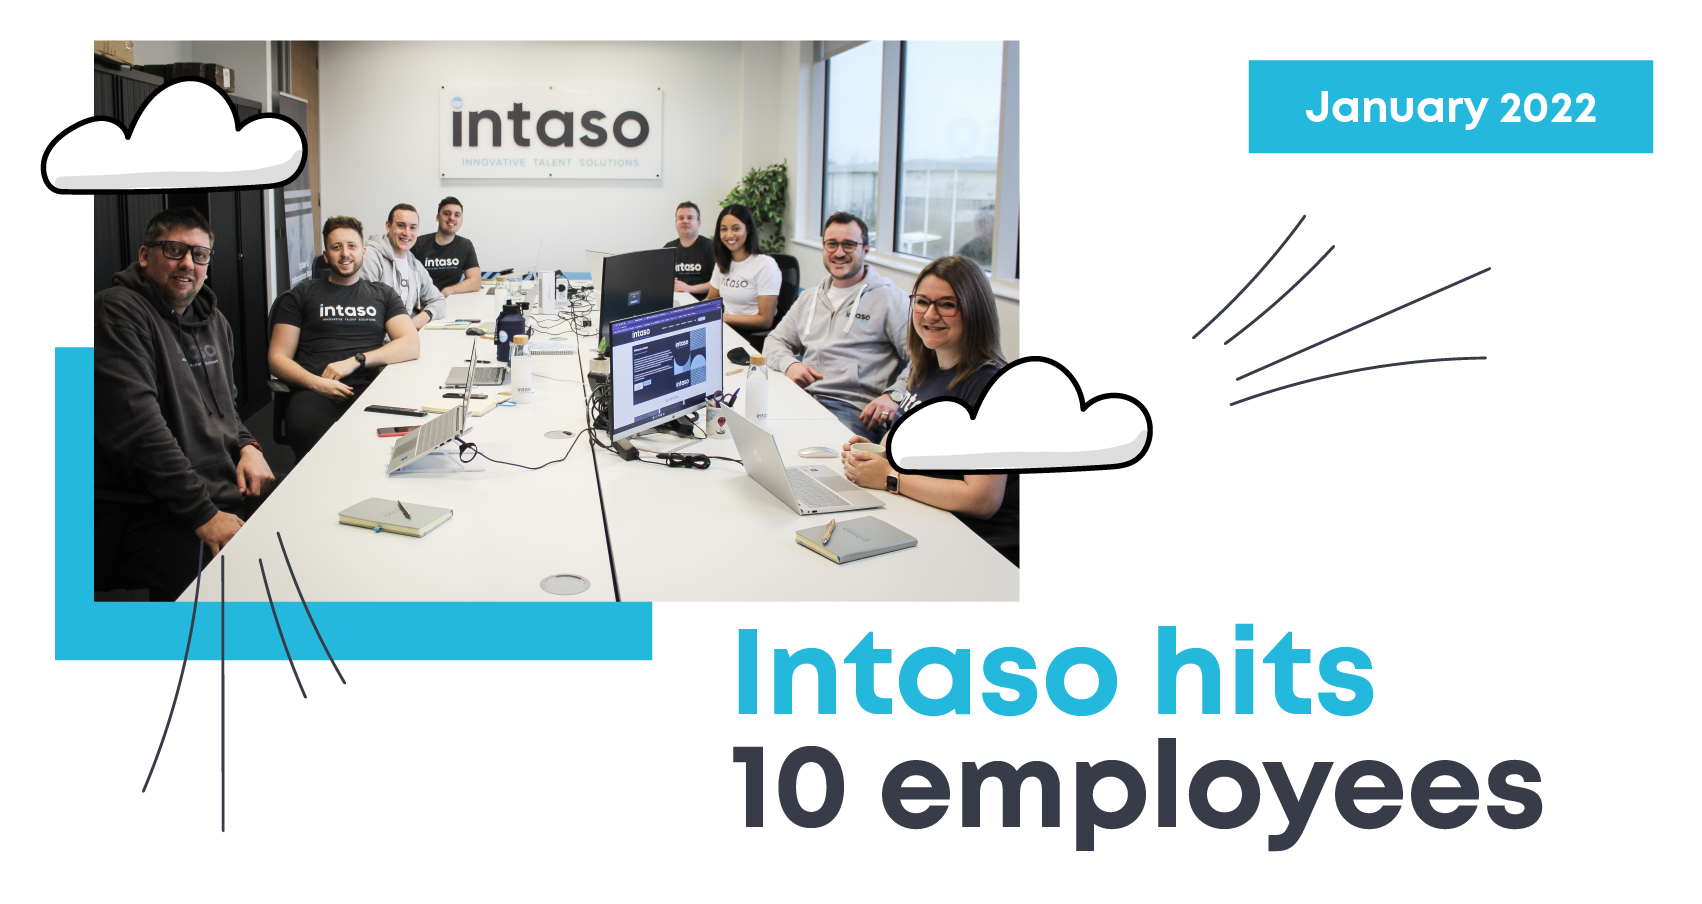 Intaso hit 10 employees